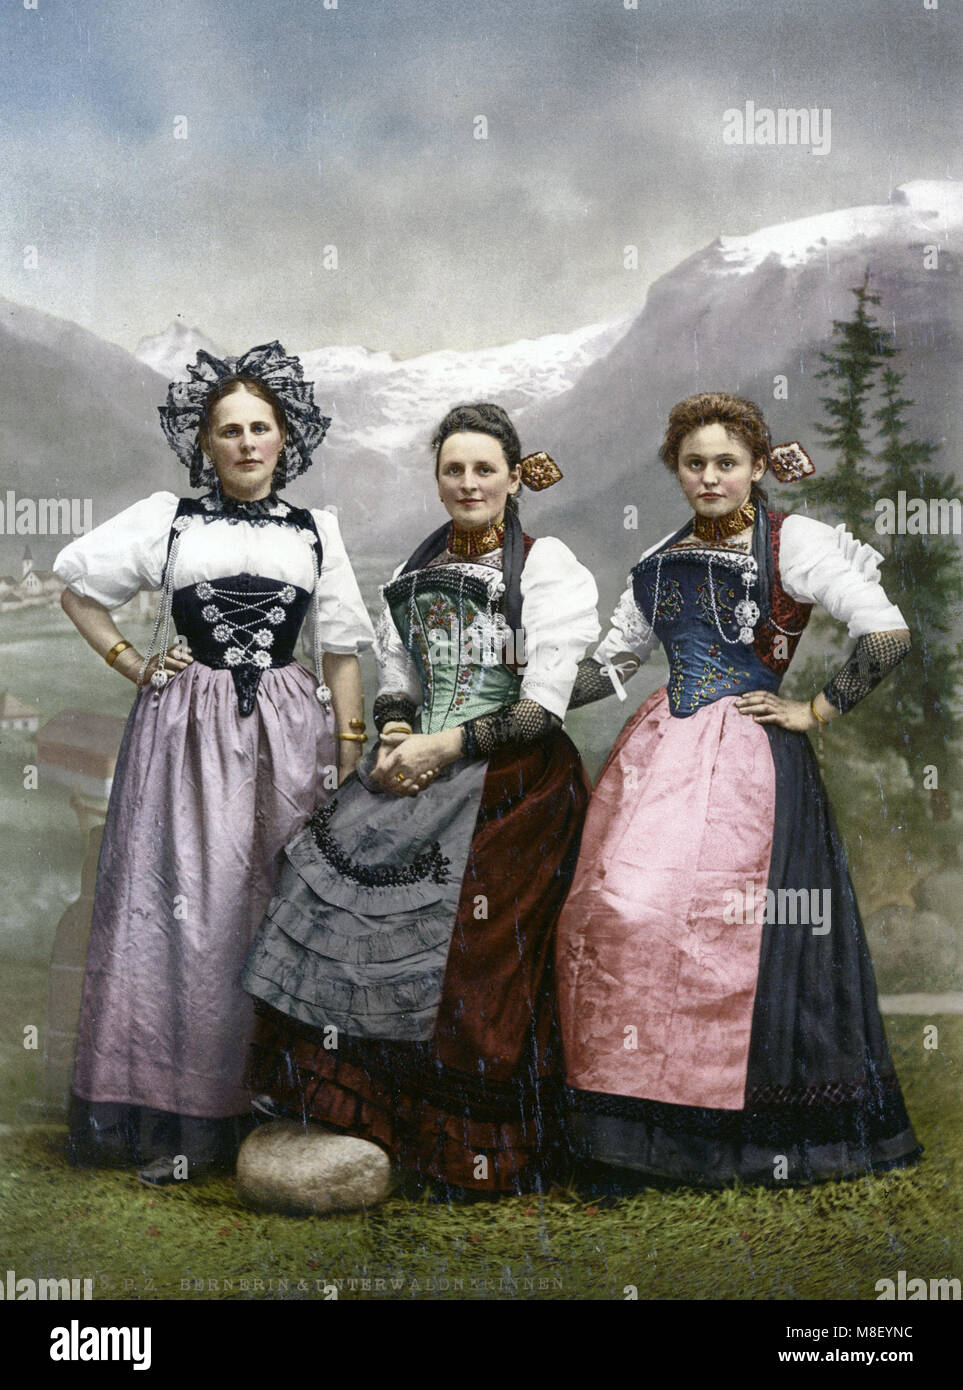 c.1890 - Switzerland - young Swiss women in traditional dress Stock Photo -  Alamy